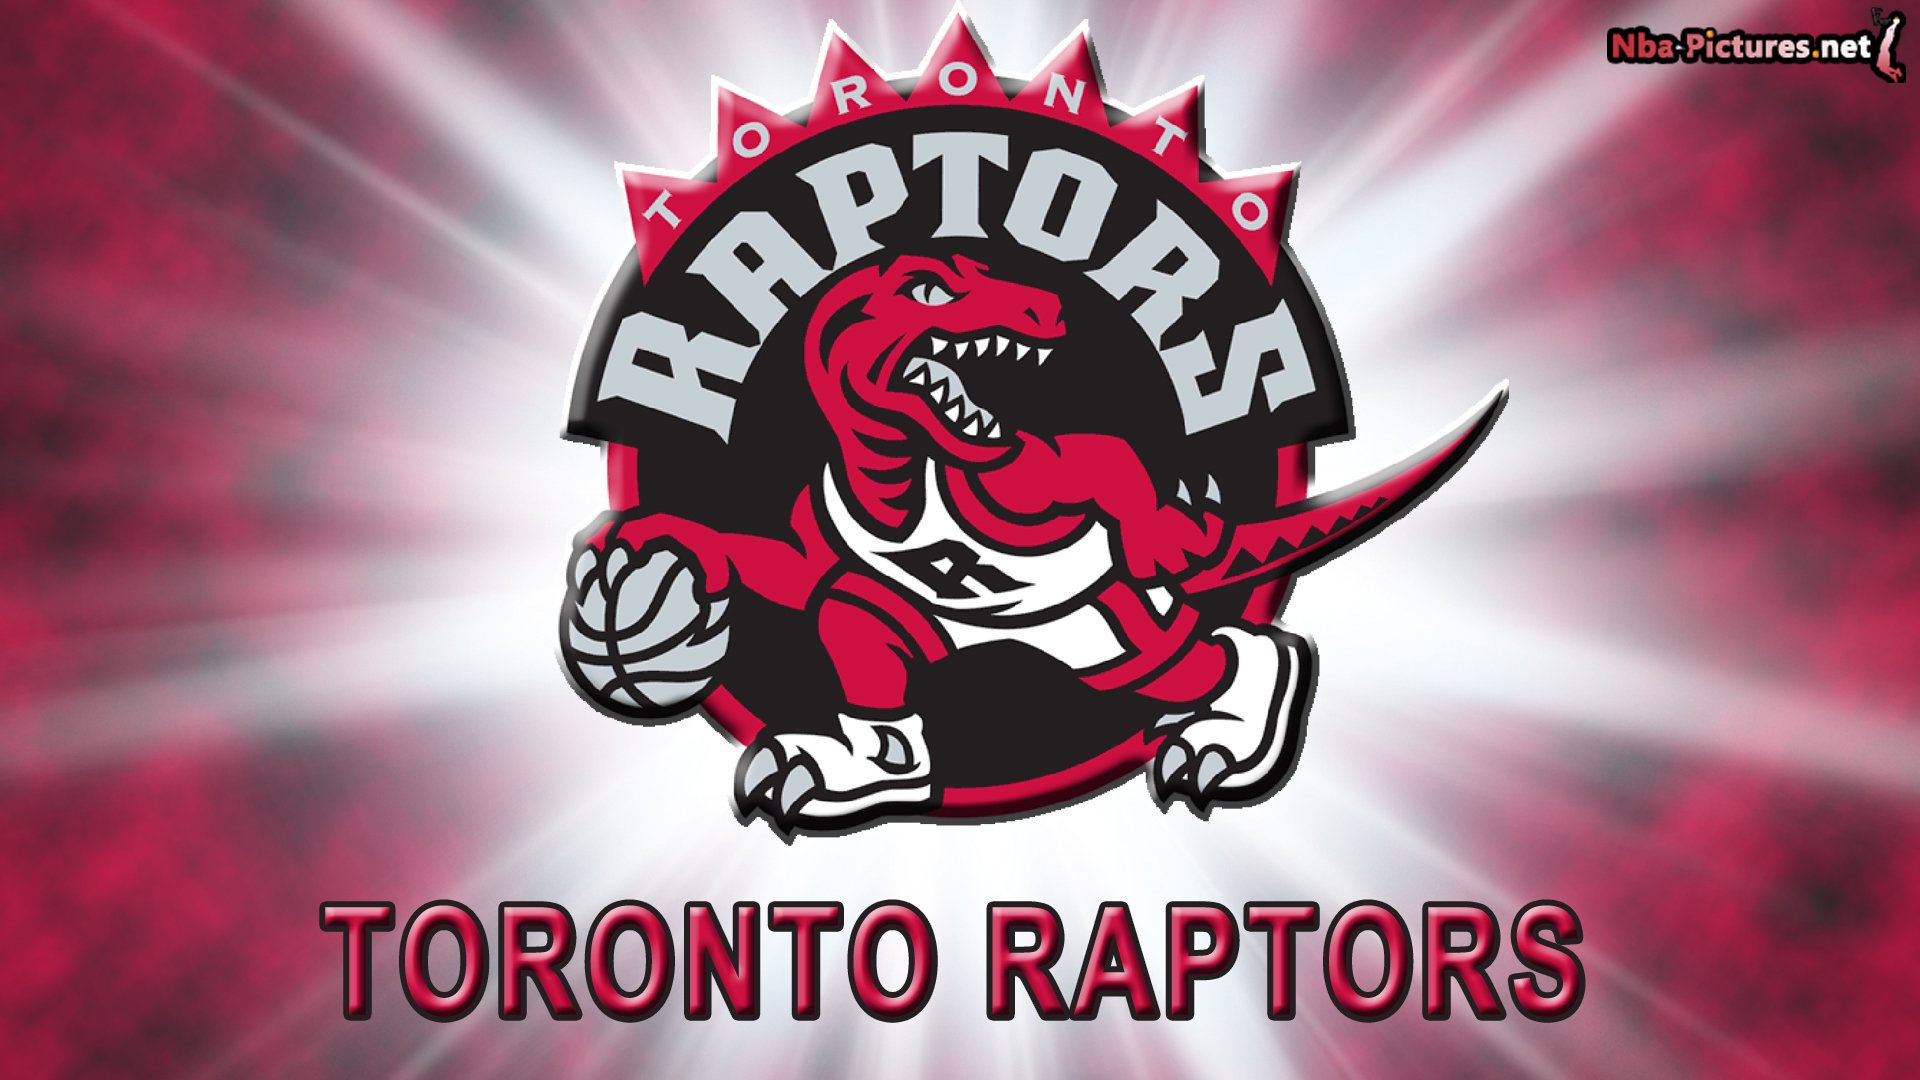 Toronto Raptors Hd Wallpaper Background Image 1920x1080 Id999005